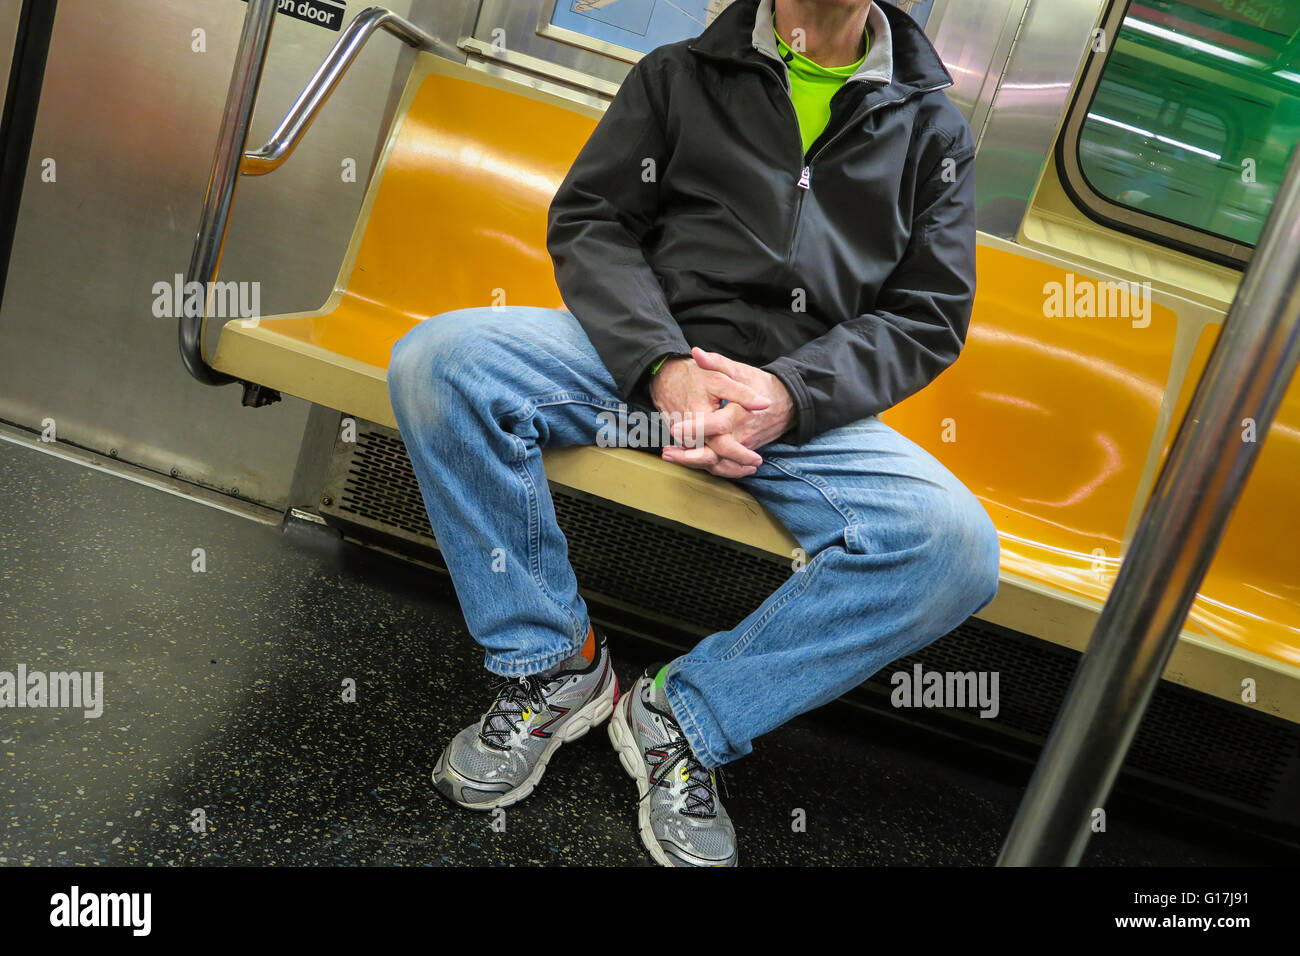 Man Hogging More than One Seat (man spreading) on New York City Subway (tube), NYC, USA Stock Photo